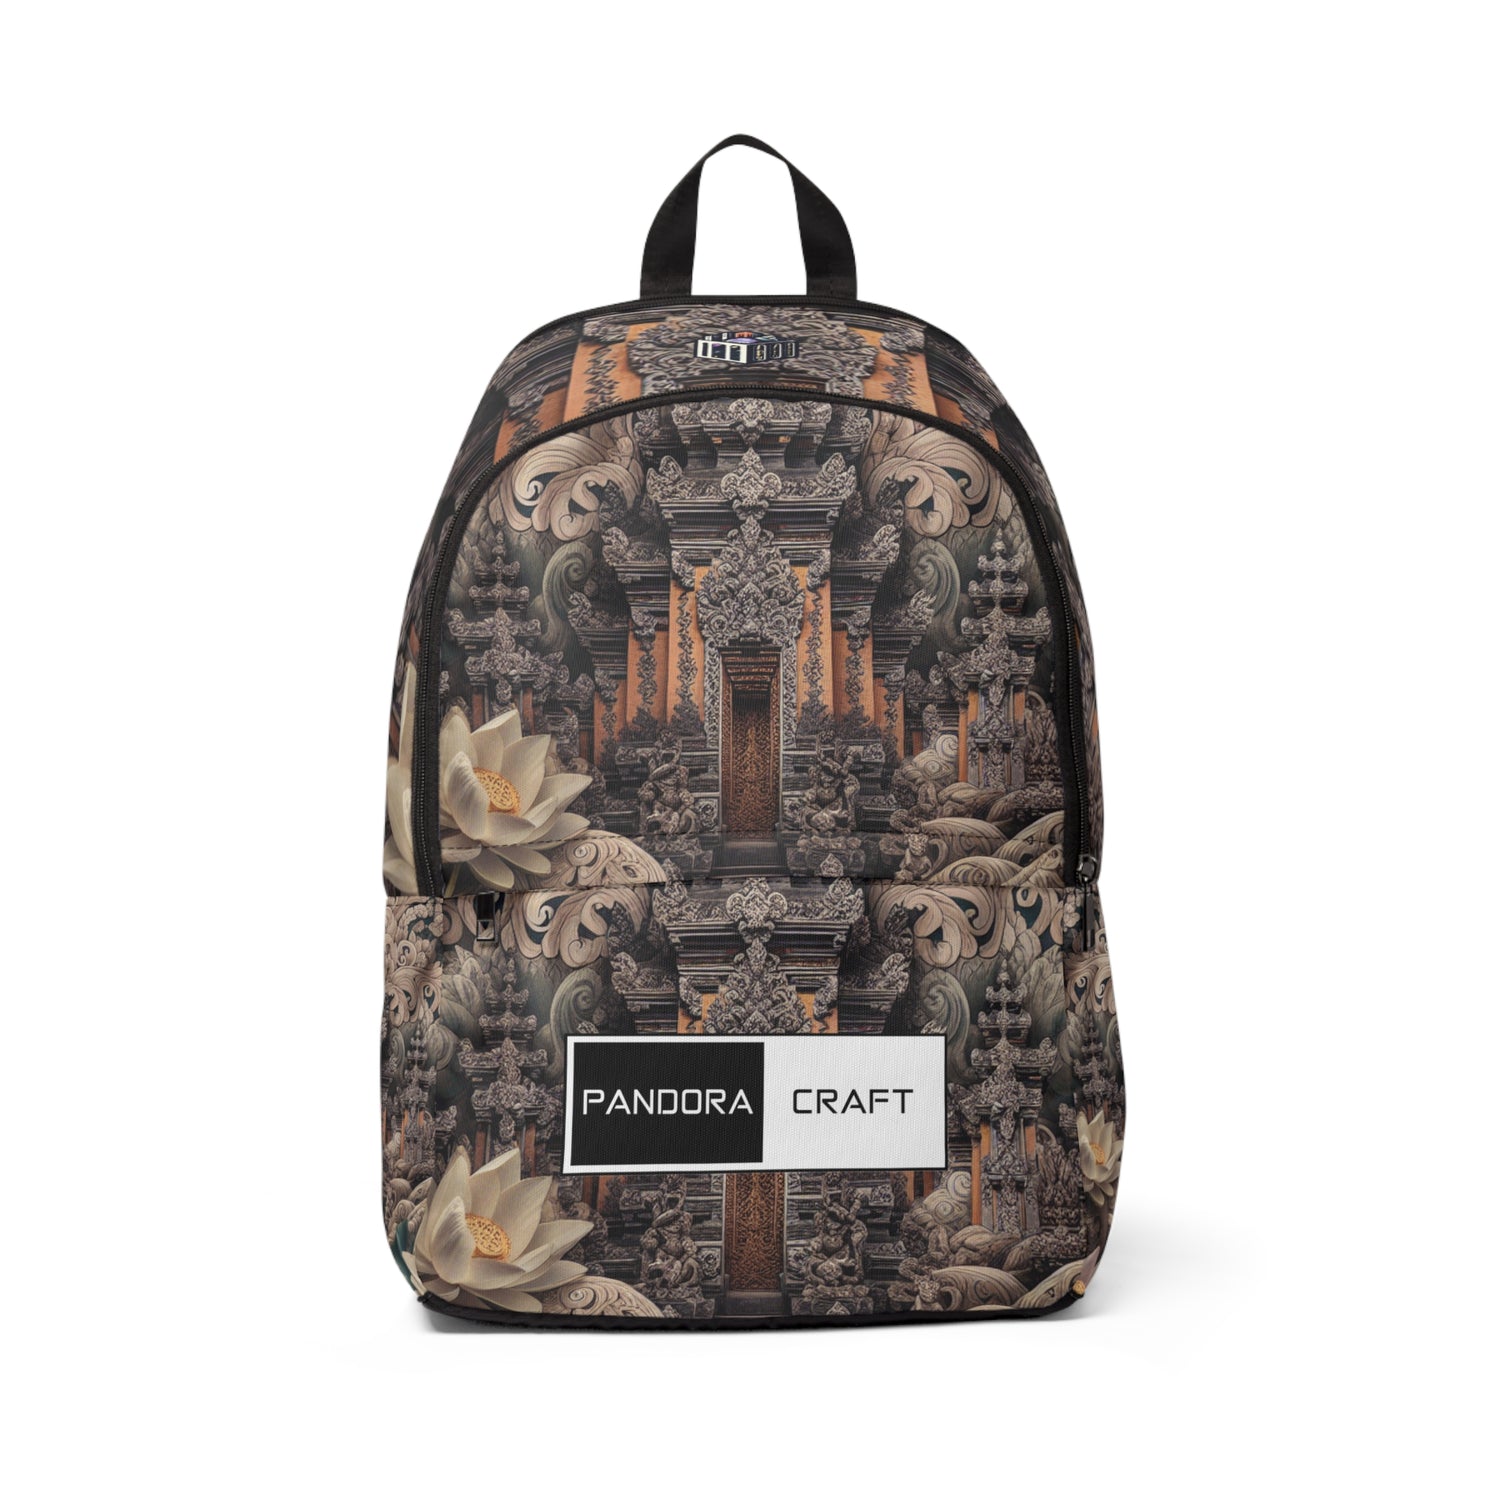 "Lotus Stone Pack" - Laptop Backpack Rucksack Bag for Men Women, Water Resistant